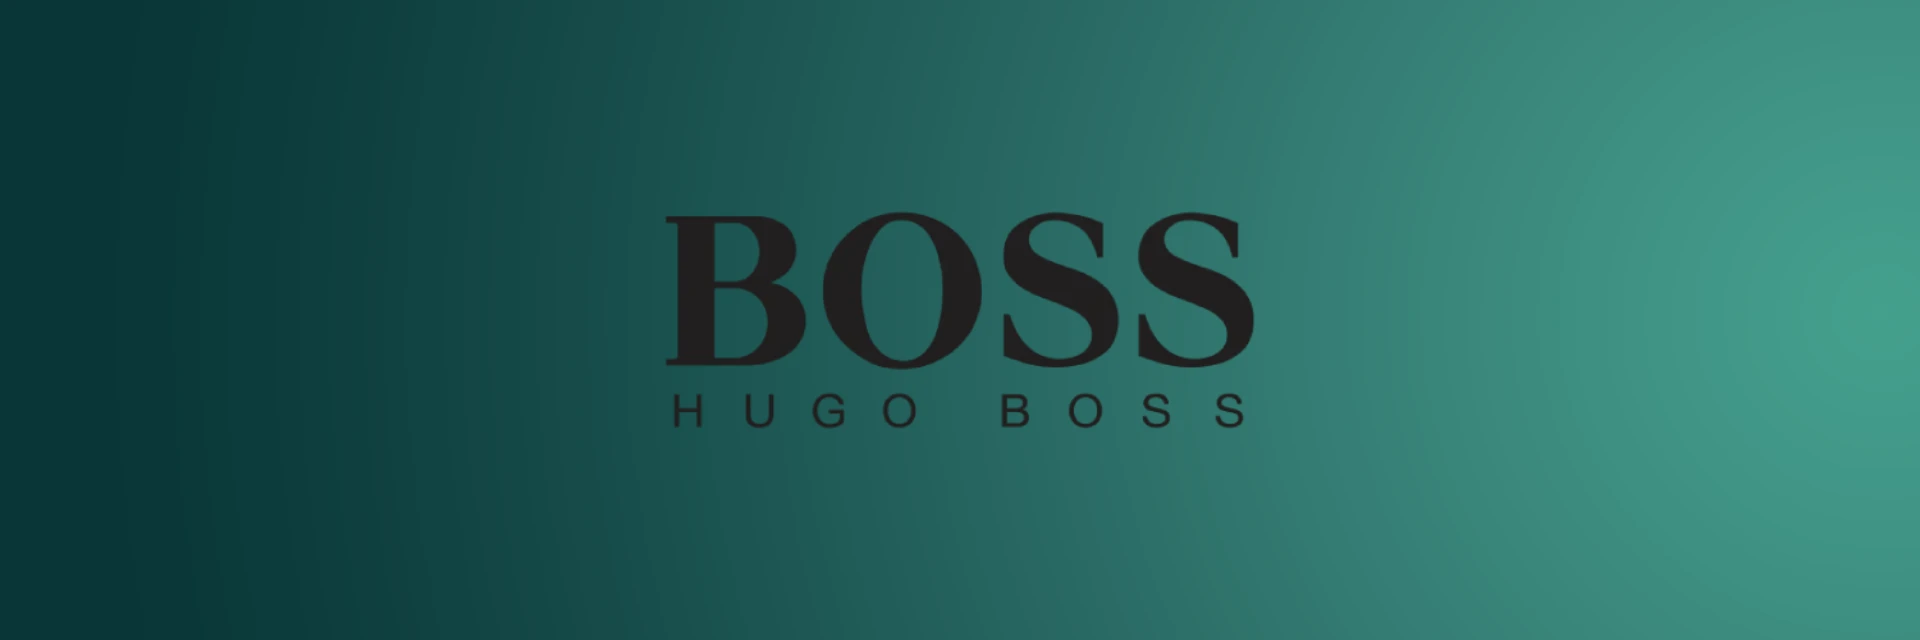 Hugo Boss perfume brand banner image